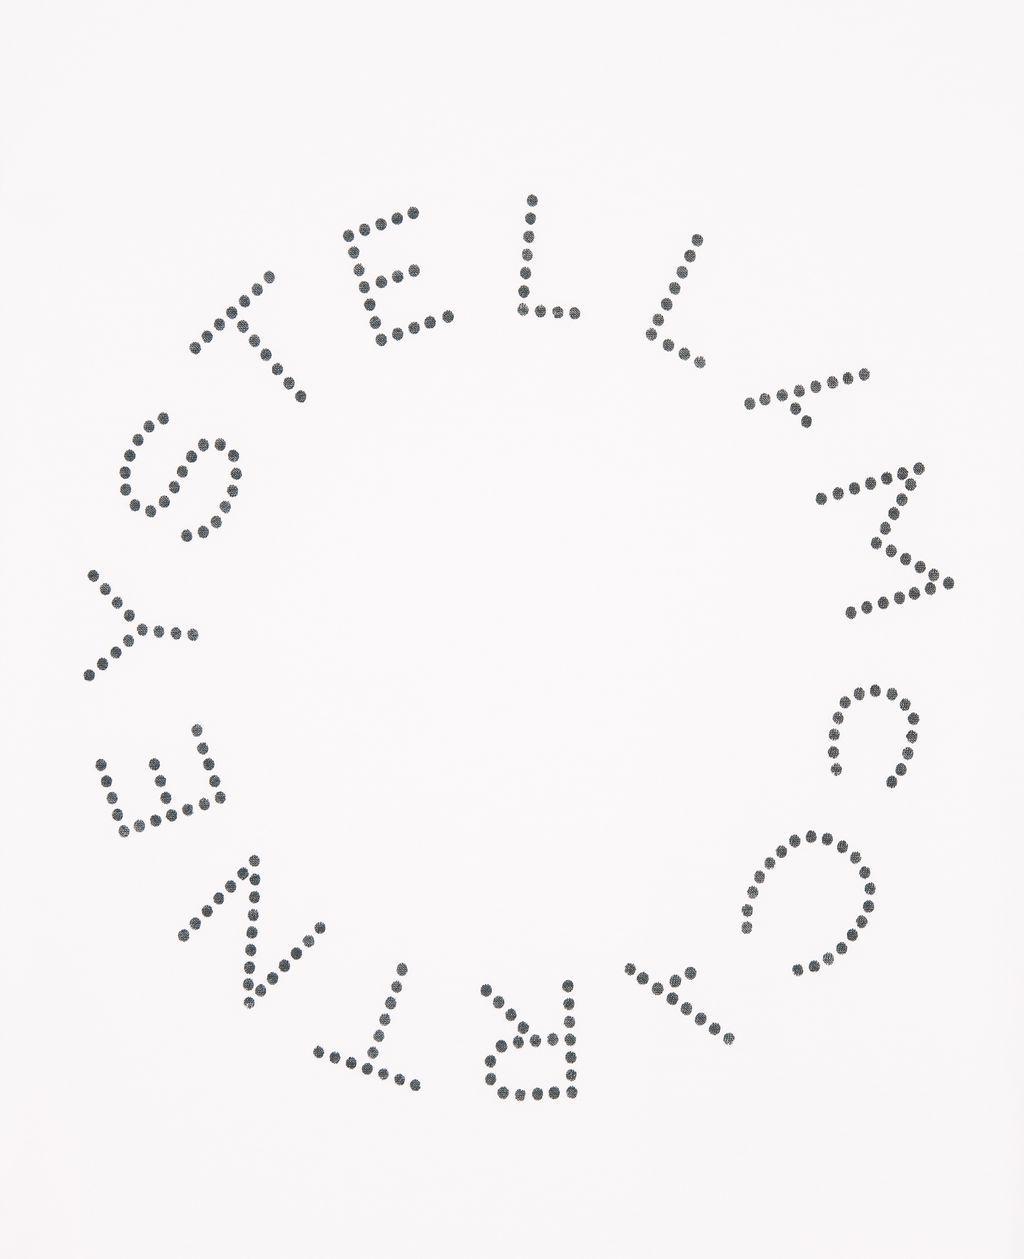 Stella McCartney Logo - LogoDix